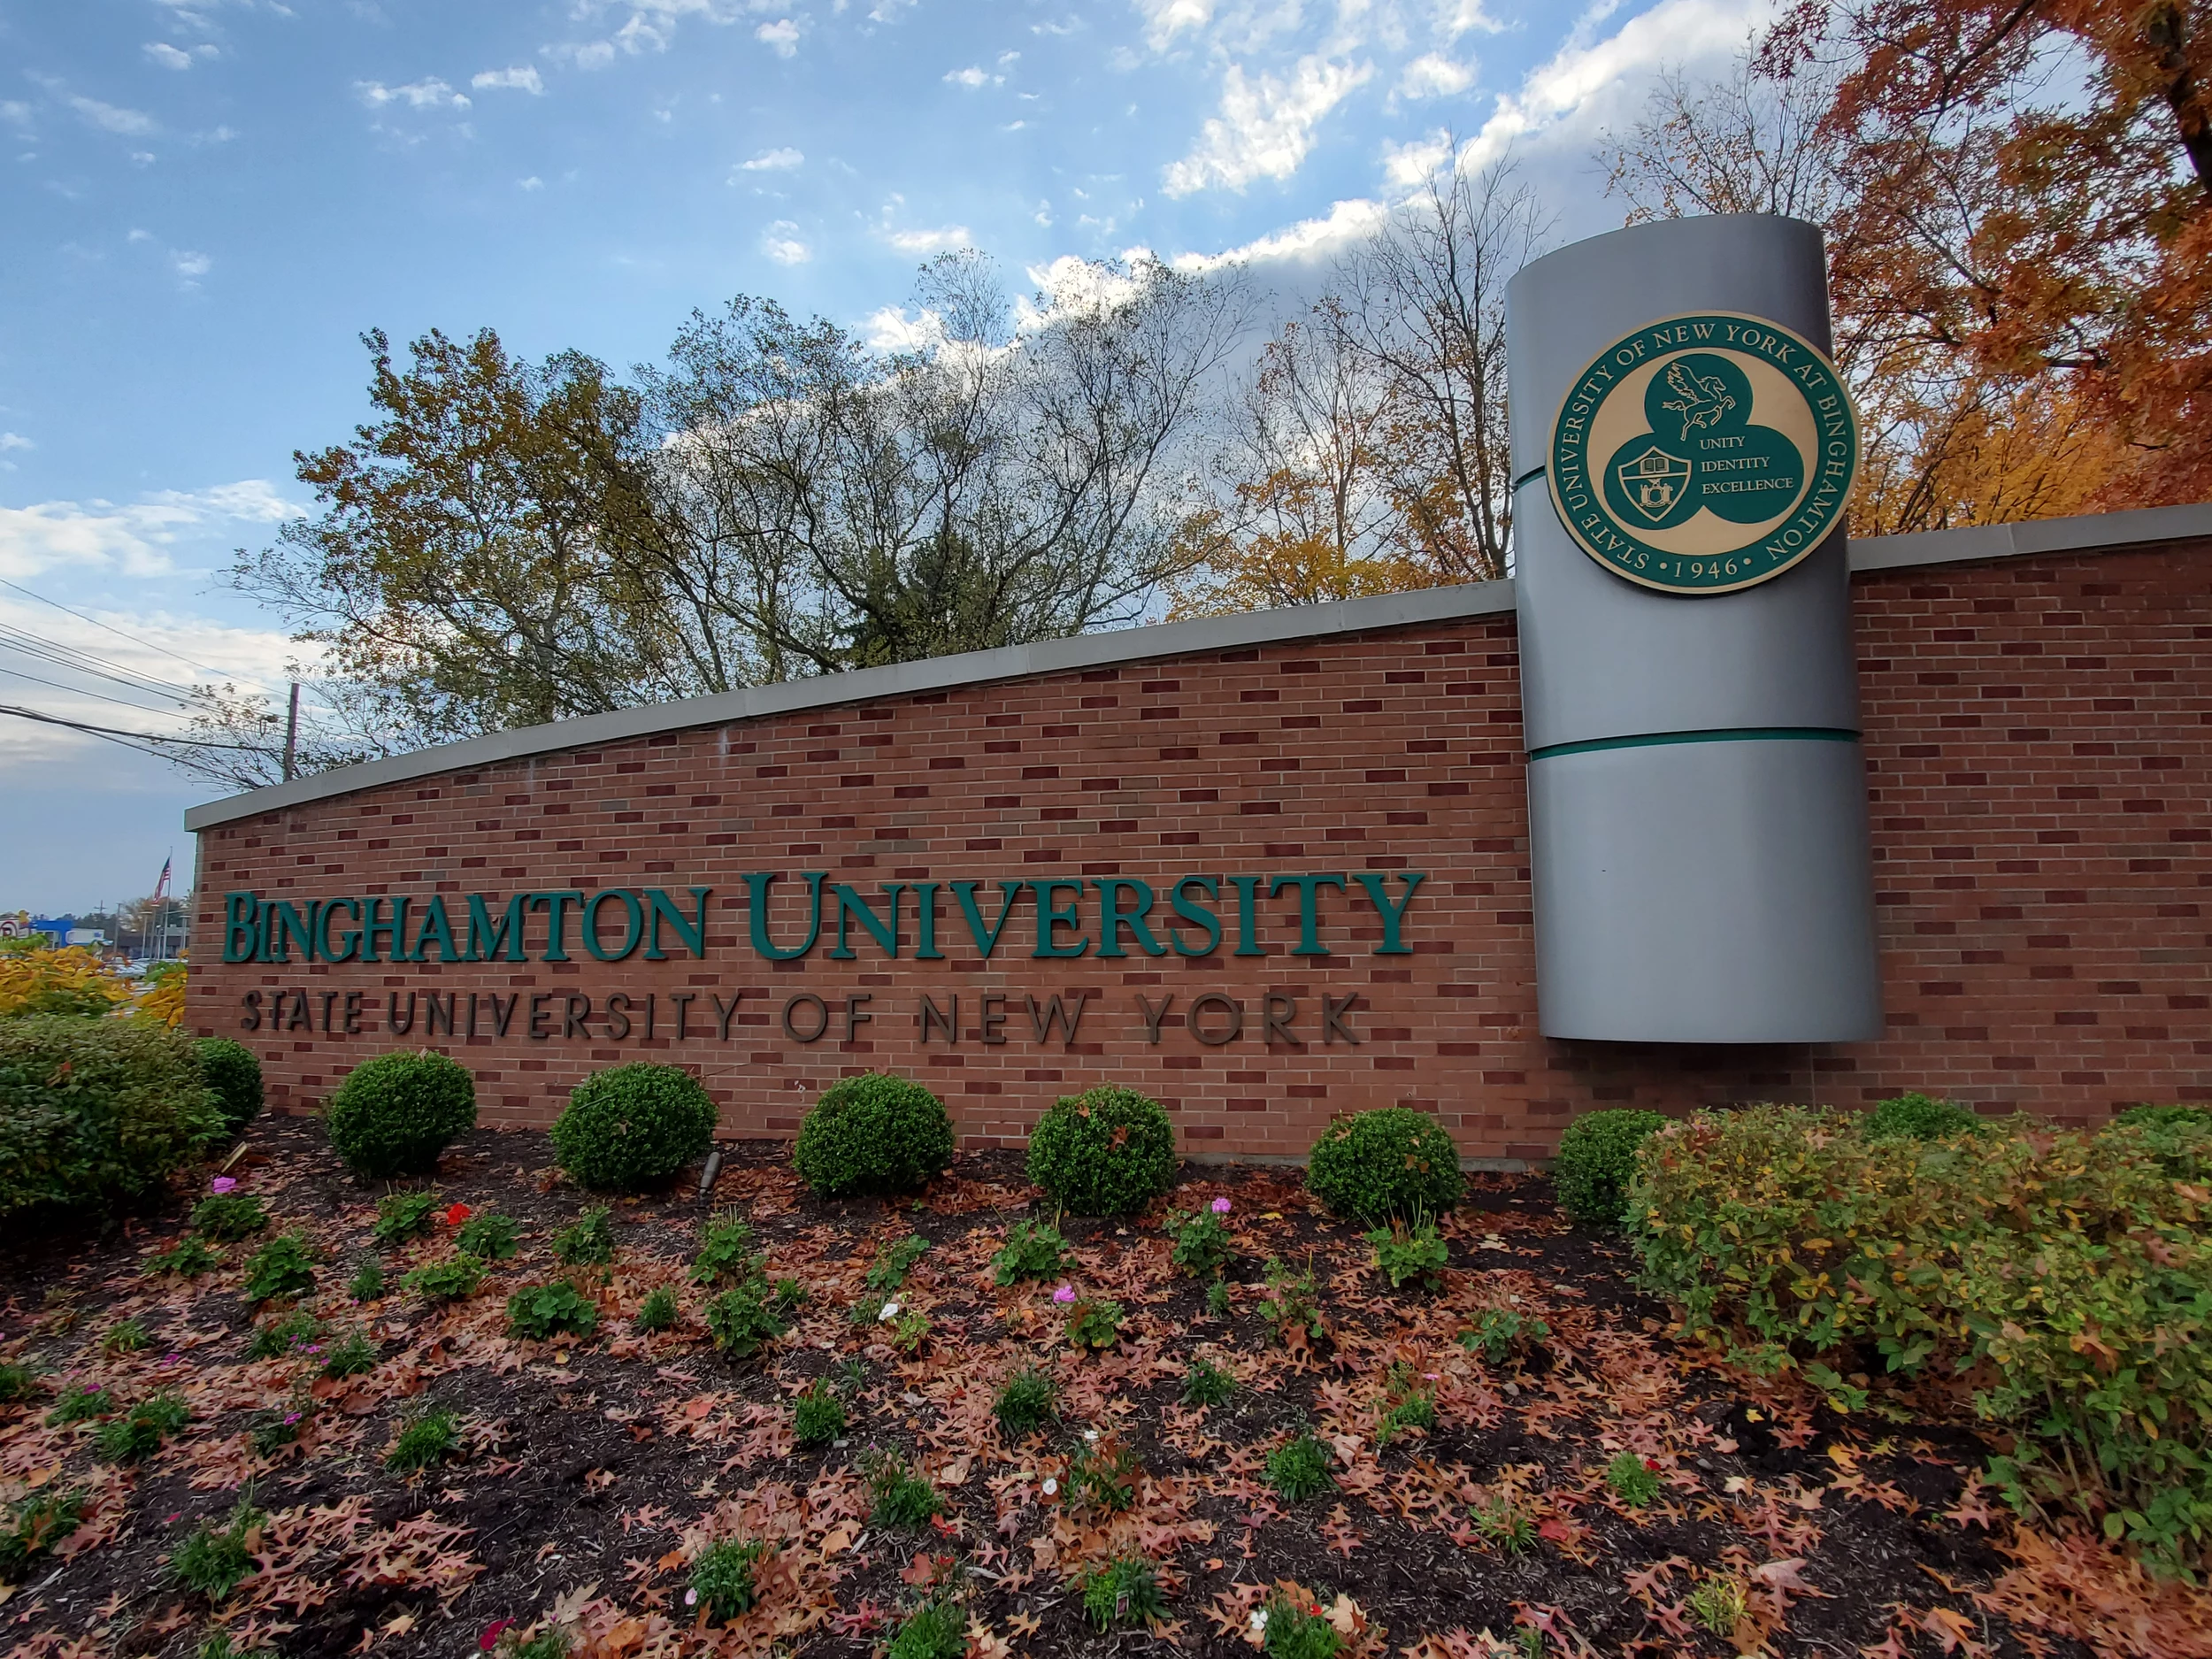 New Binghamton University Calendar 2022 2023 Ngtsdp - Timeshare 2022